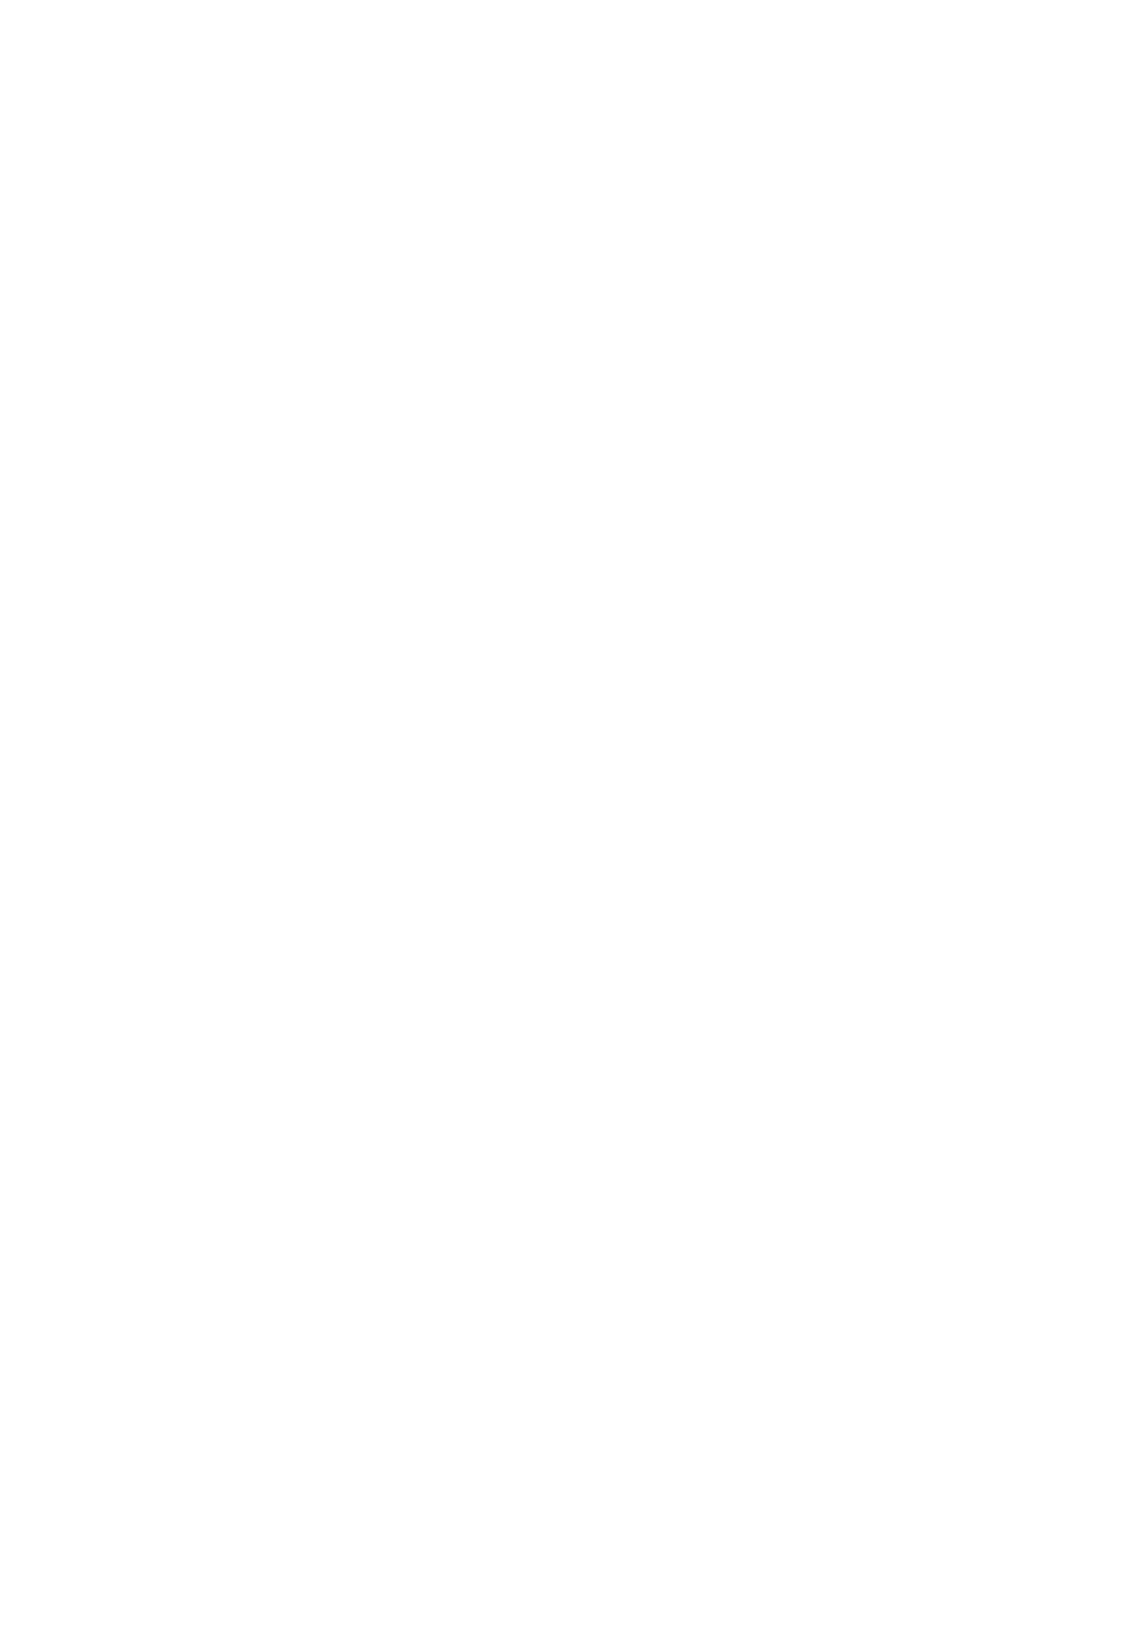 Cue Health logo large for dark backgrounds (transparent PNG)